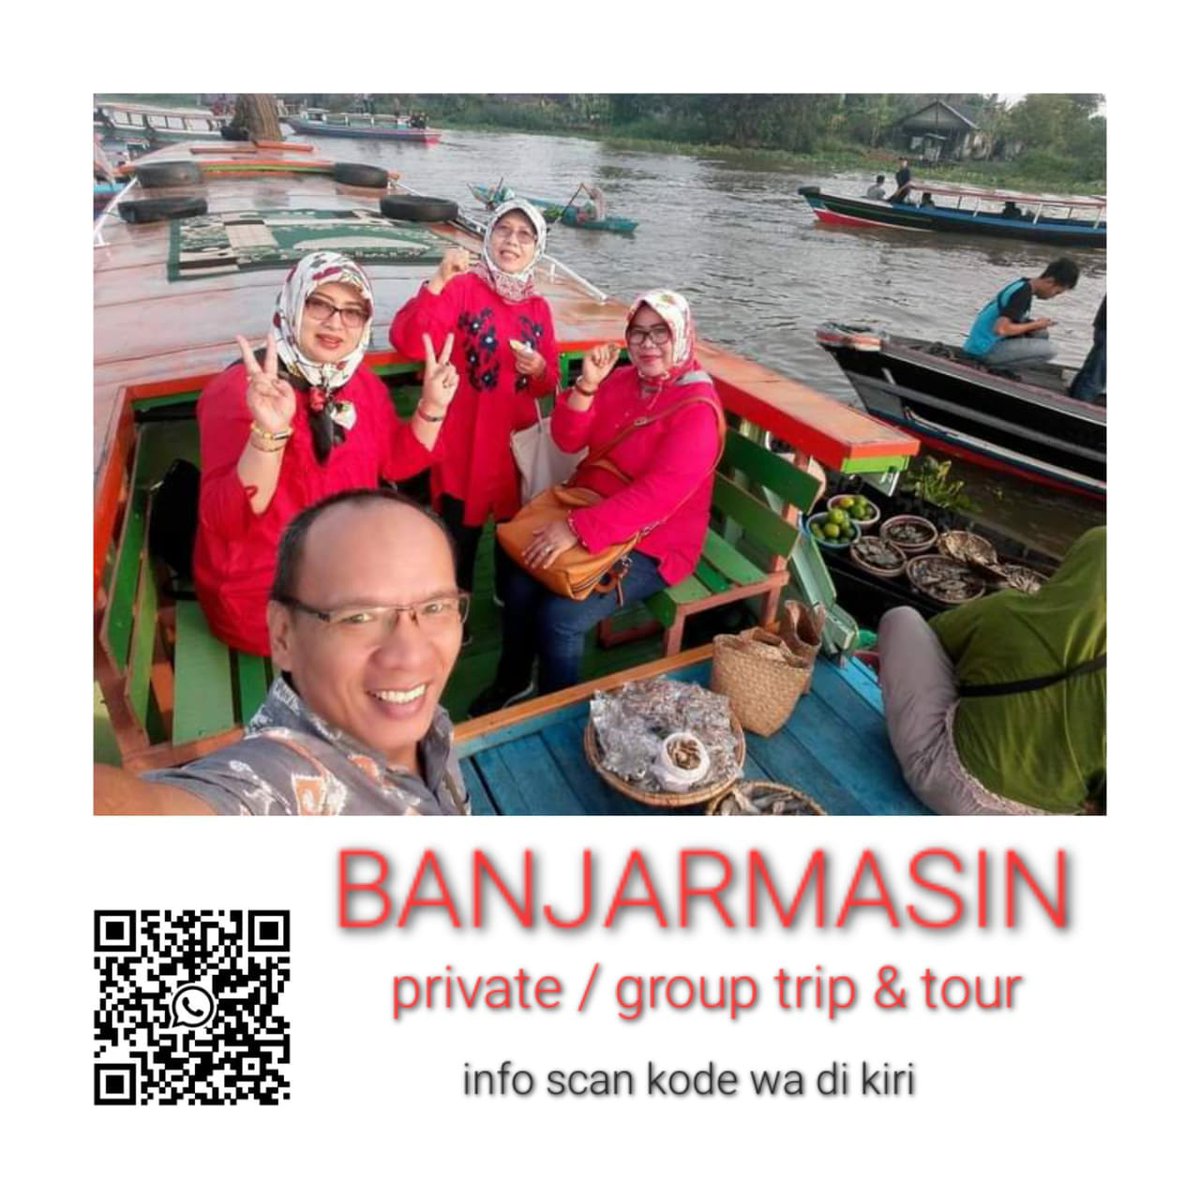 #banjarmasin #trip #tour #transport #travel #guide 
#boat #klotok #perahu 
#DiIndonesiaAja
#DiKalimantanAja #DiKalselAja #KalselTravel #WonderfulSouthKalimantan #WonderfulIndonesia